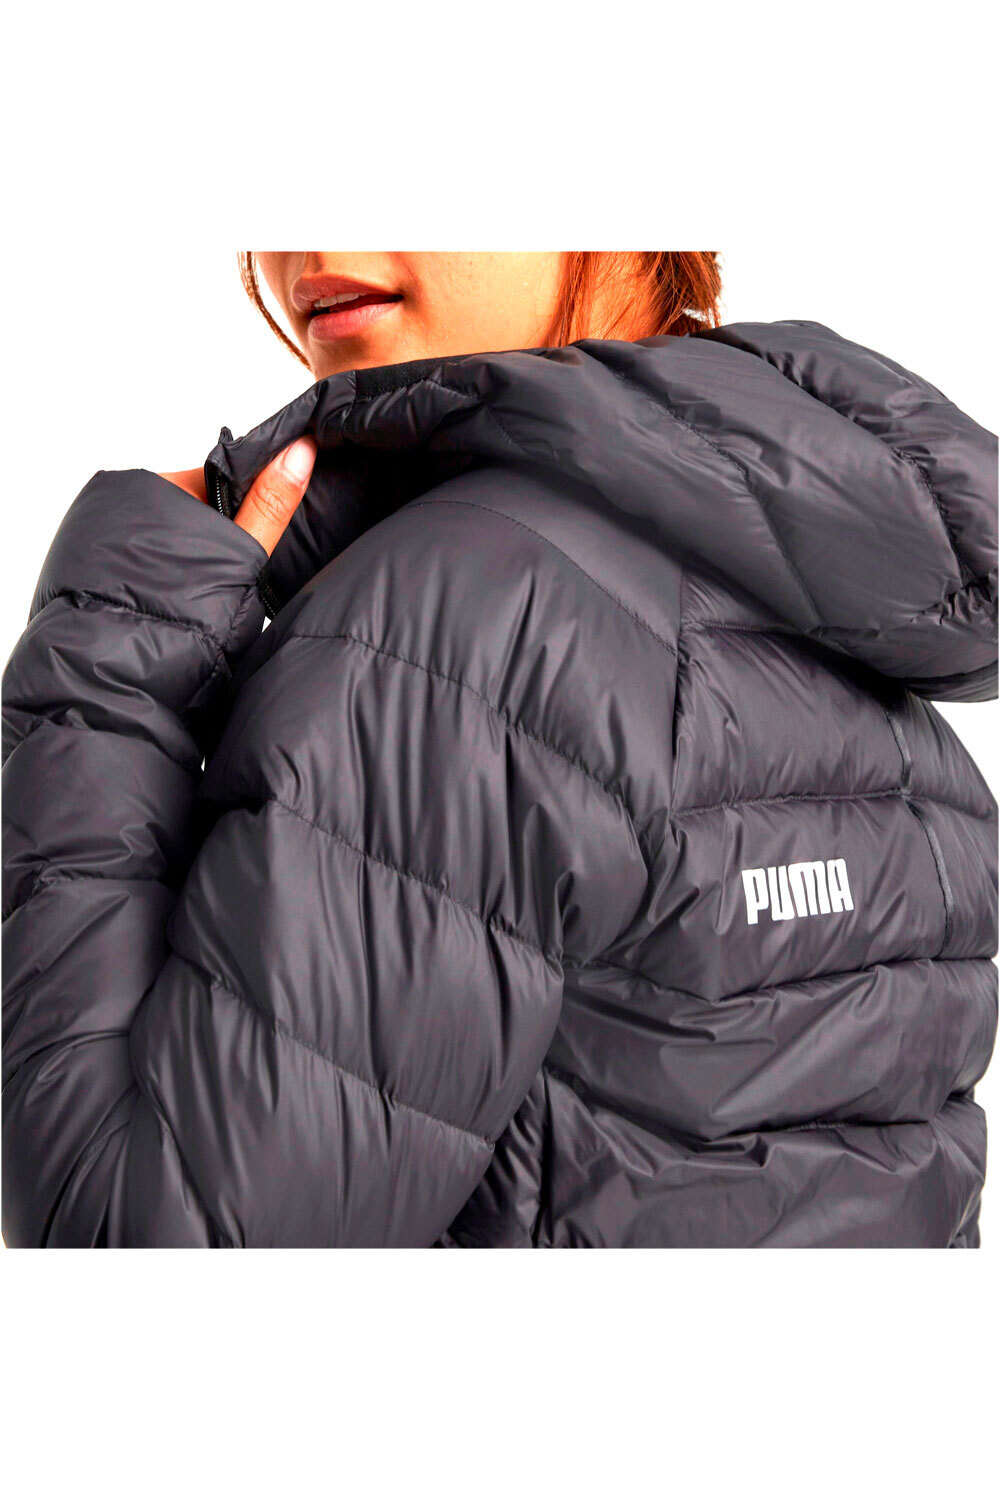 Puma chaquetas mujer PackLITE Hooded Down vista detalle